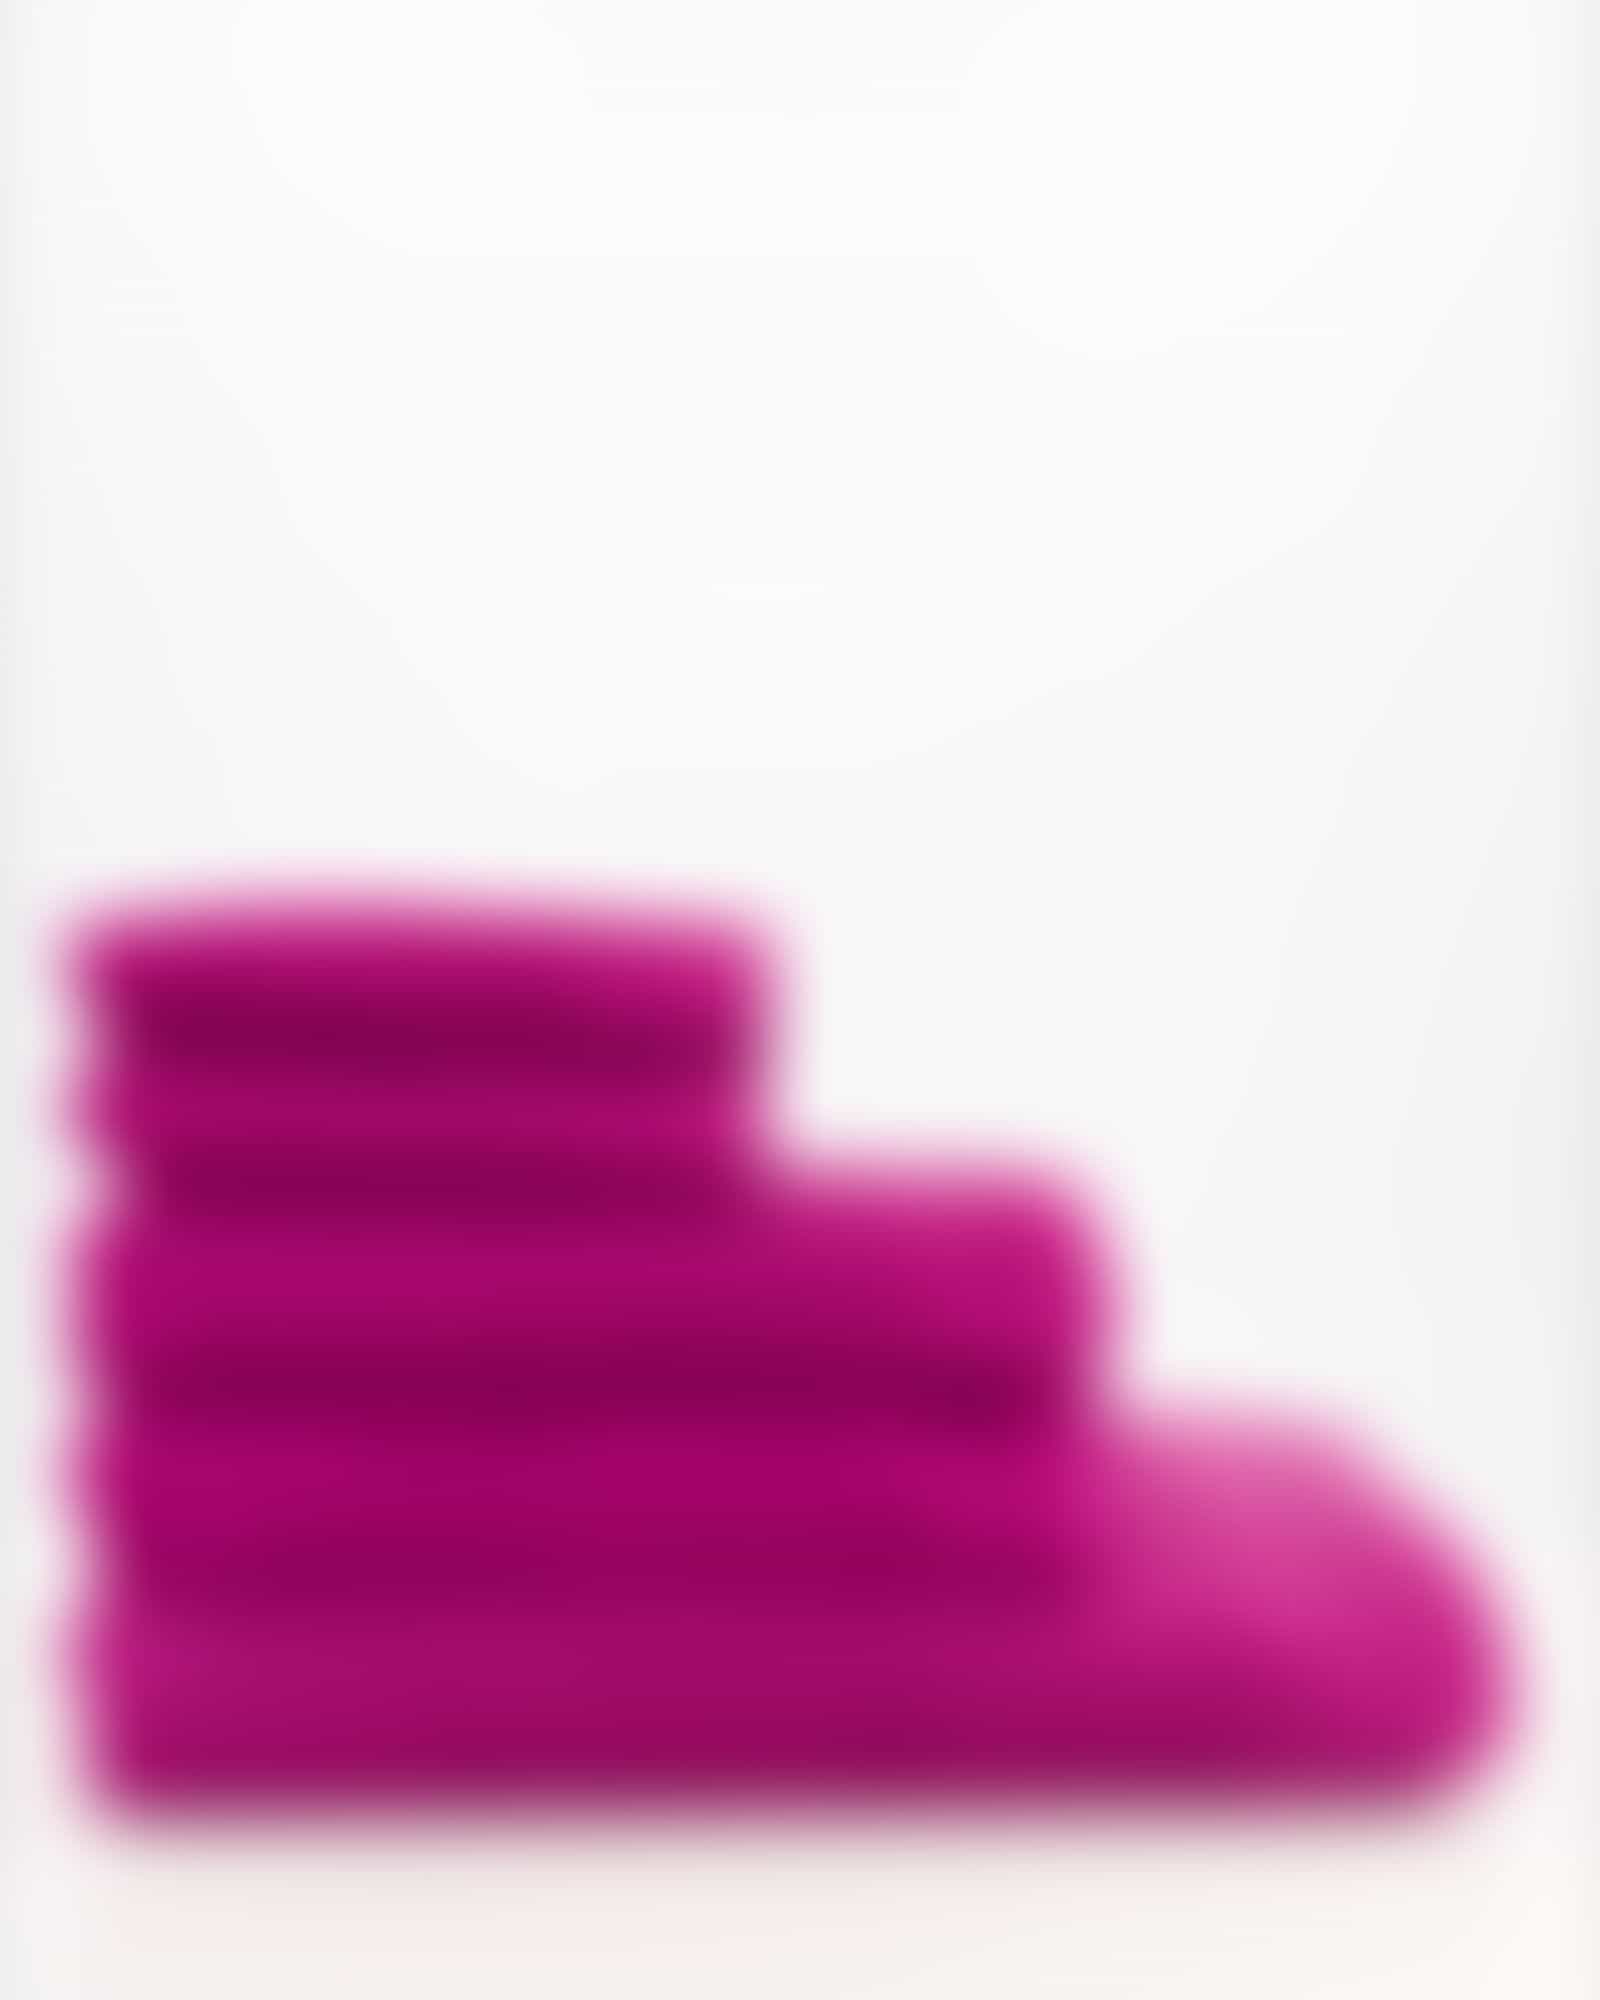 Vossen Handtücher Calypso Feeling - Farbe: purple - 8590